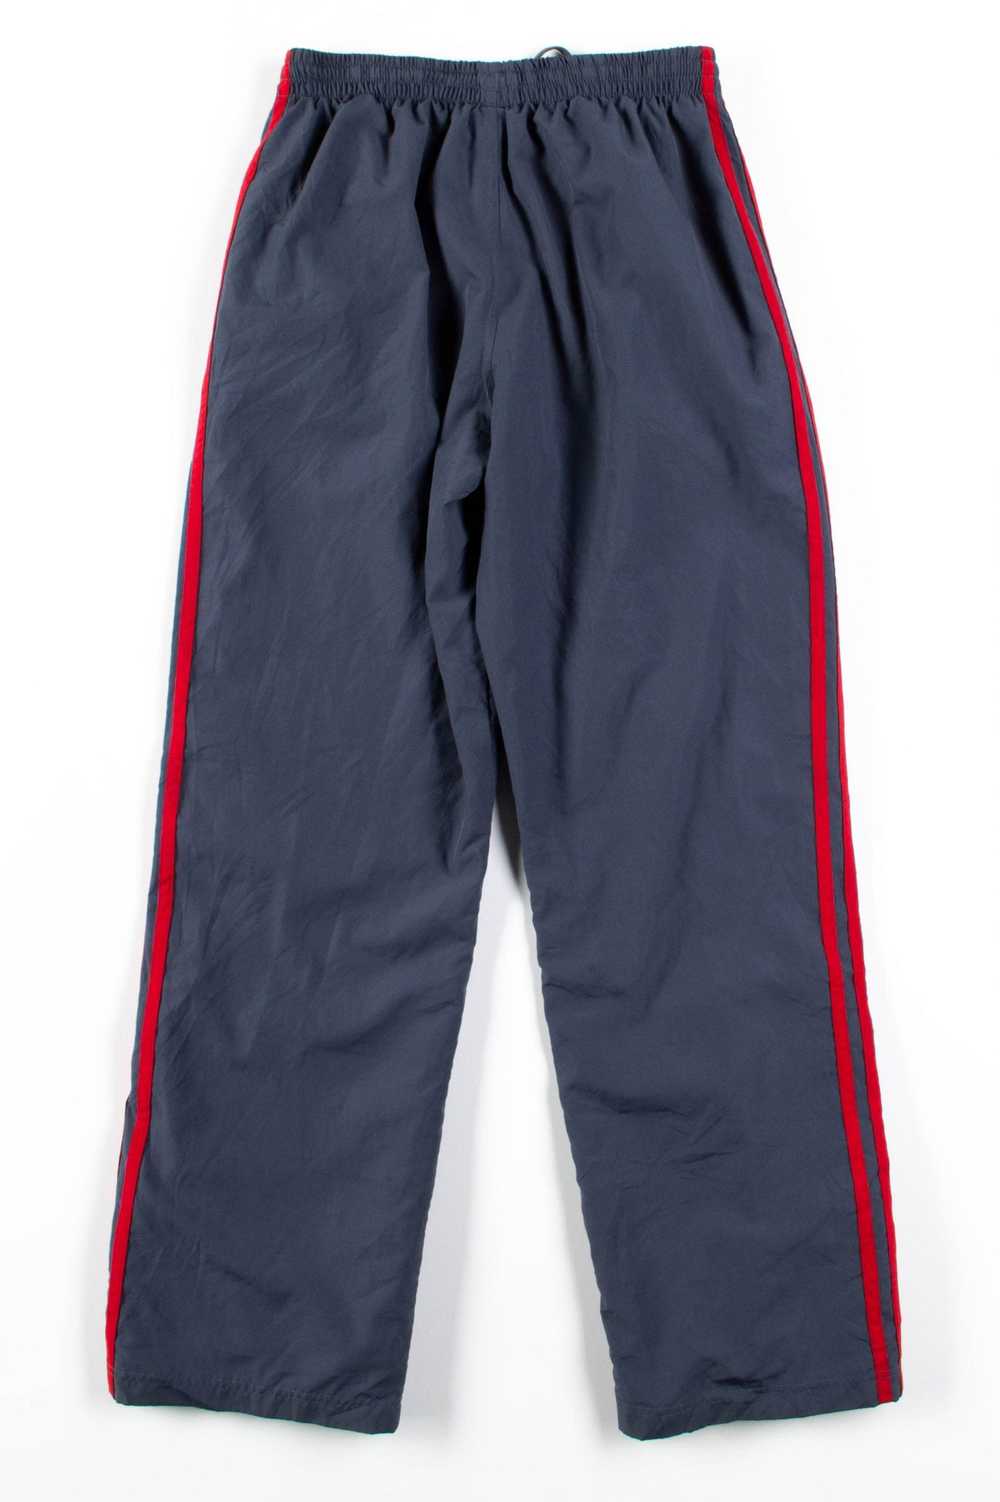 Grey & Red Adias Track Pants (sz. Youth XL) - image 3